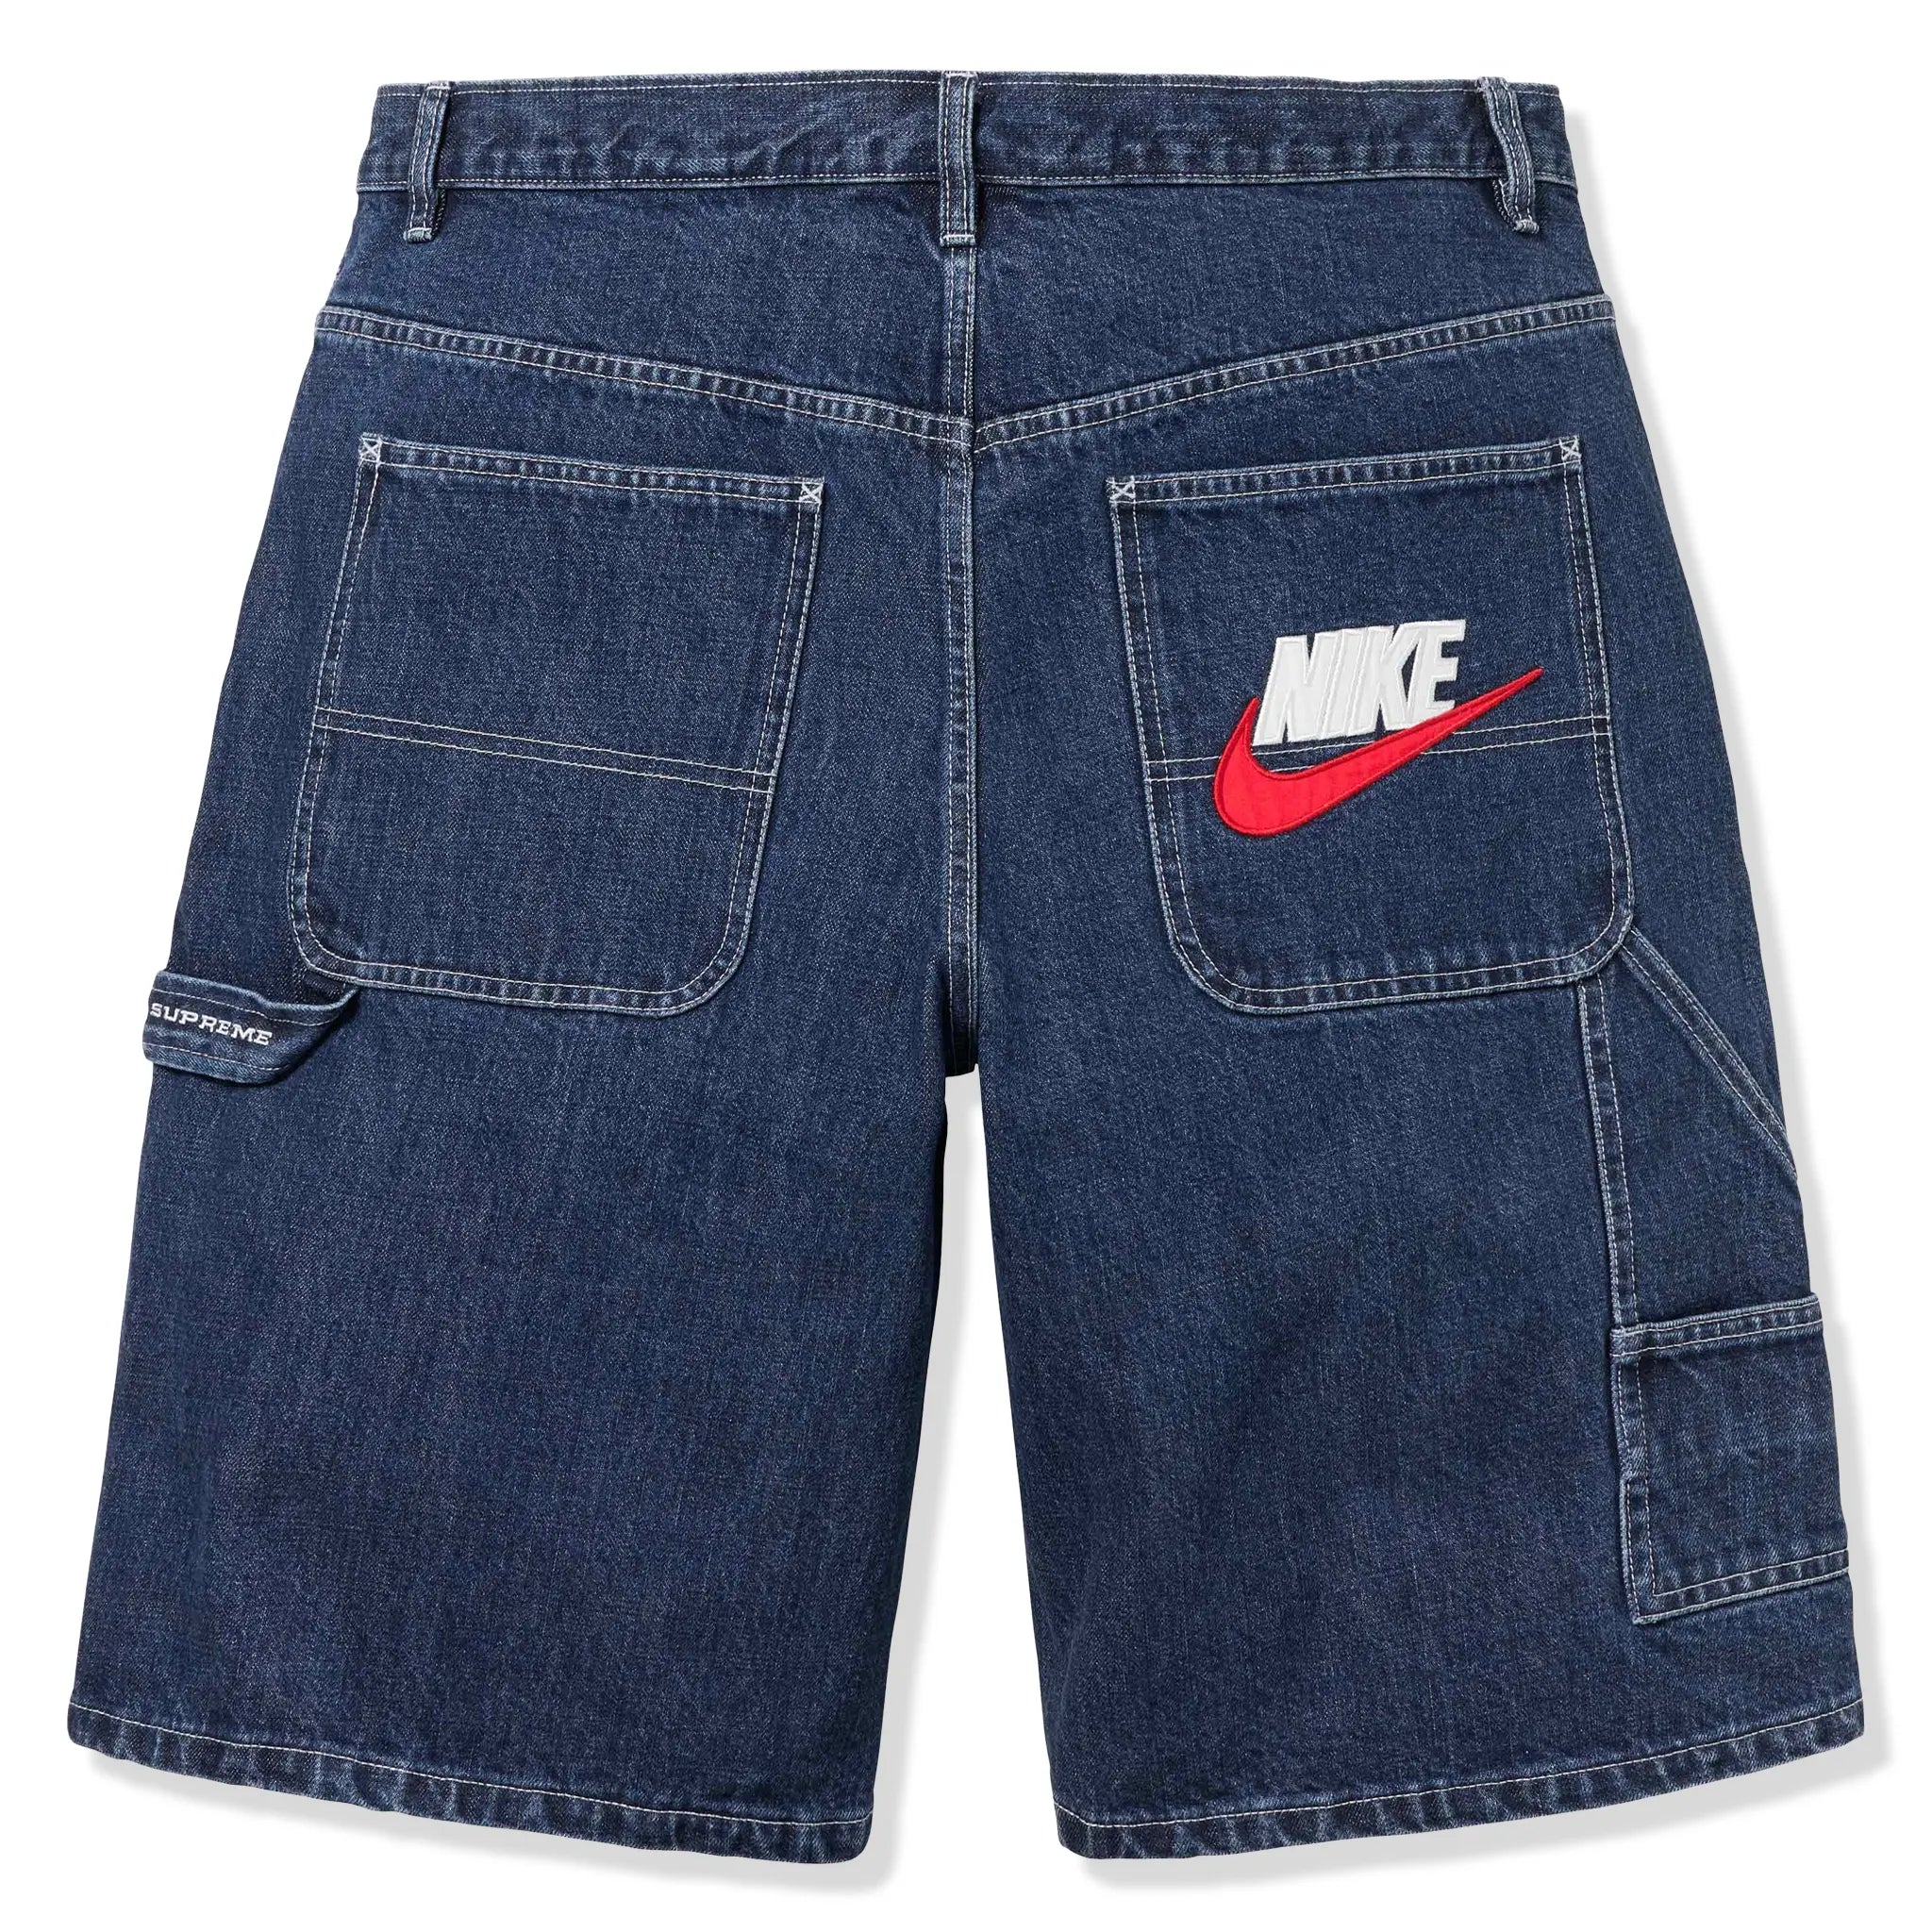 Back view of Nike Supreme Denim Indigo Blue Shorts